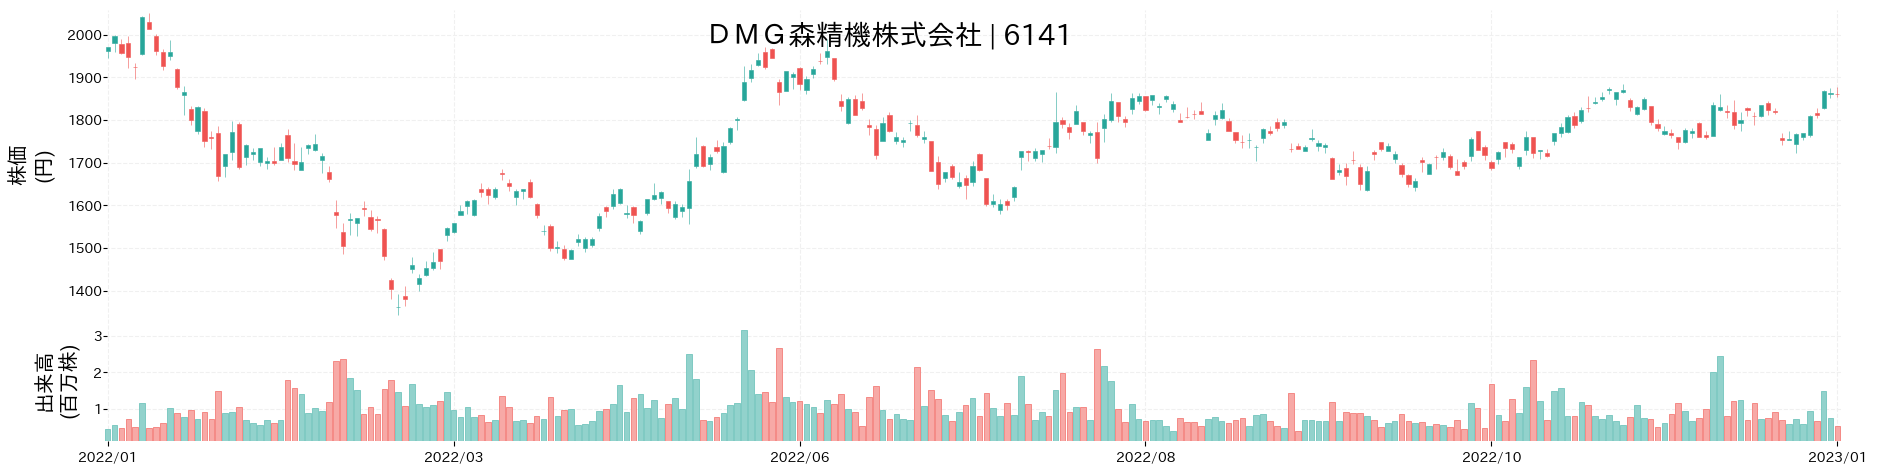 DMG森精機の株価推移(2022)